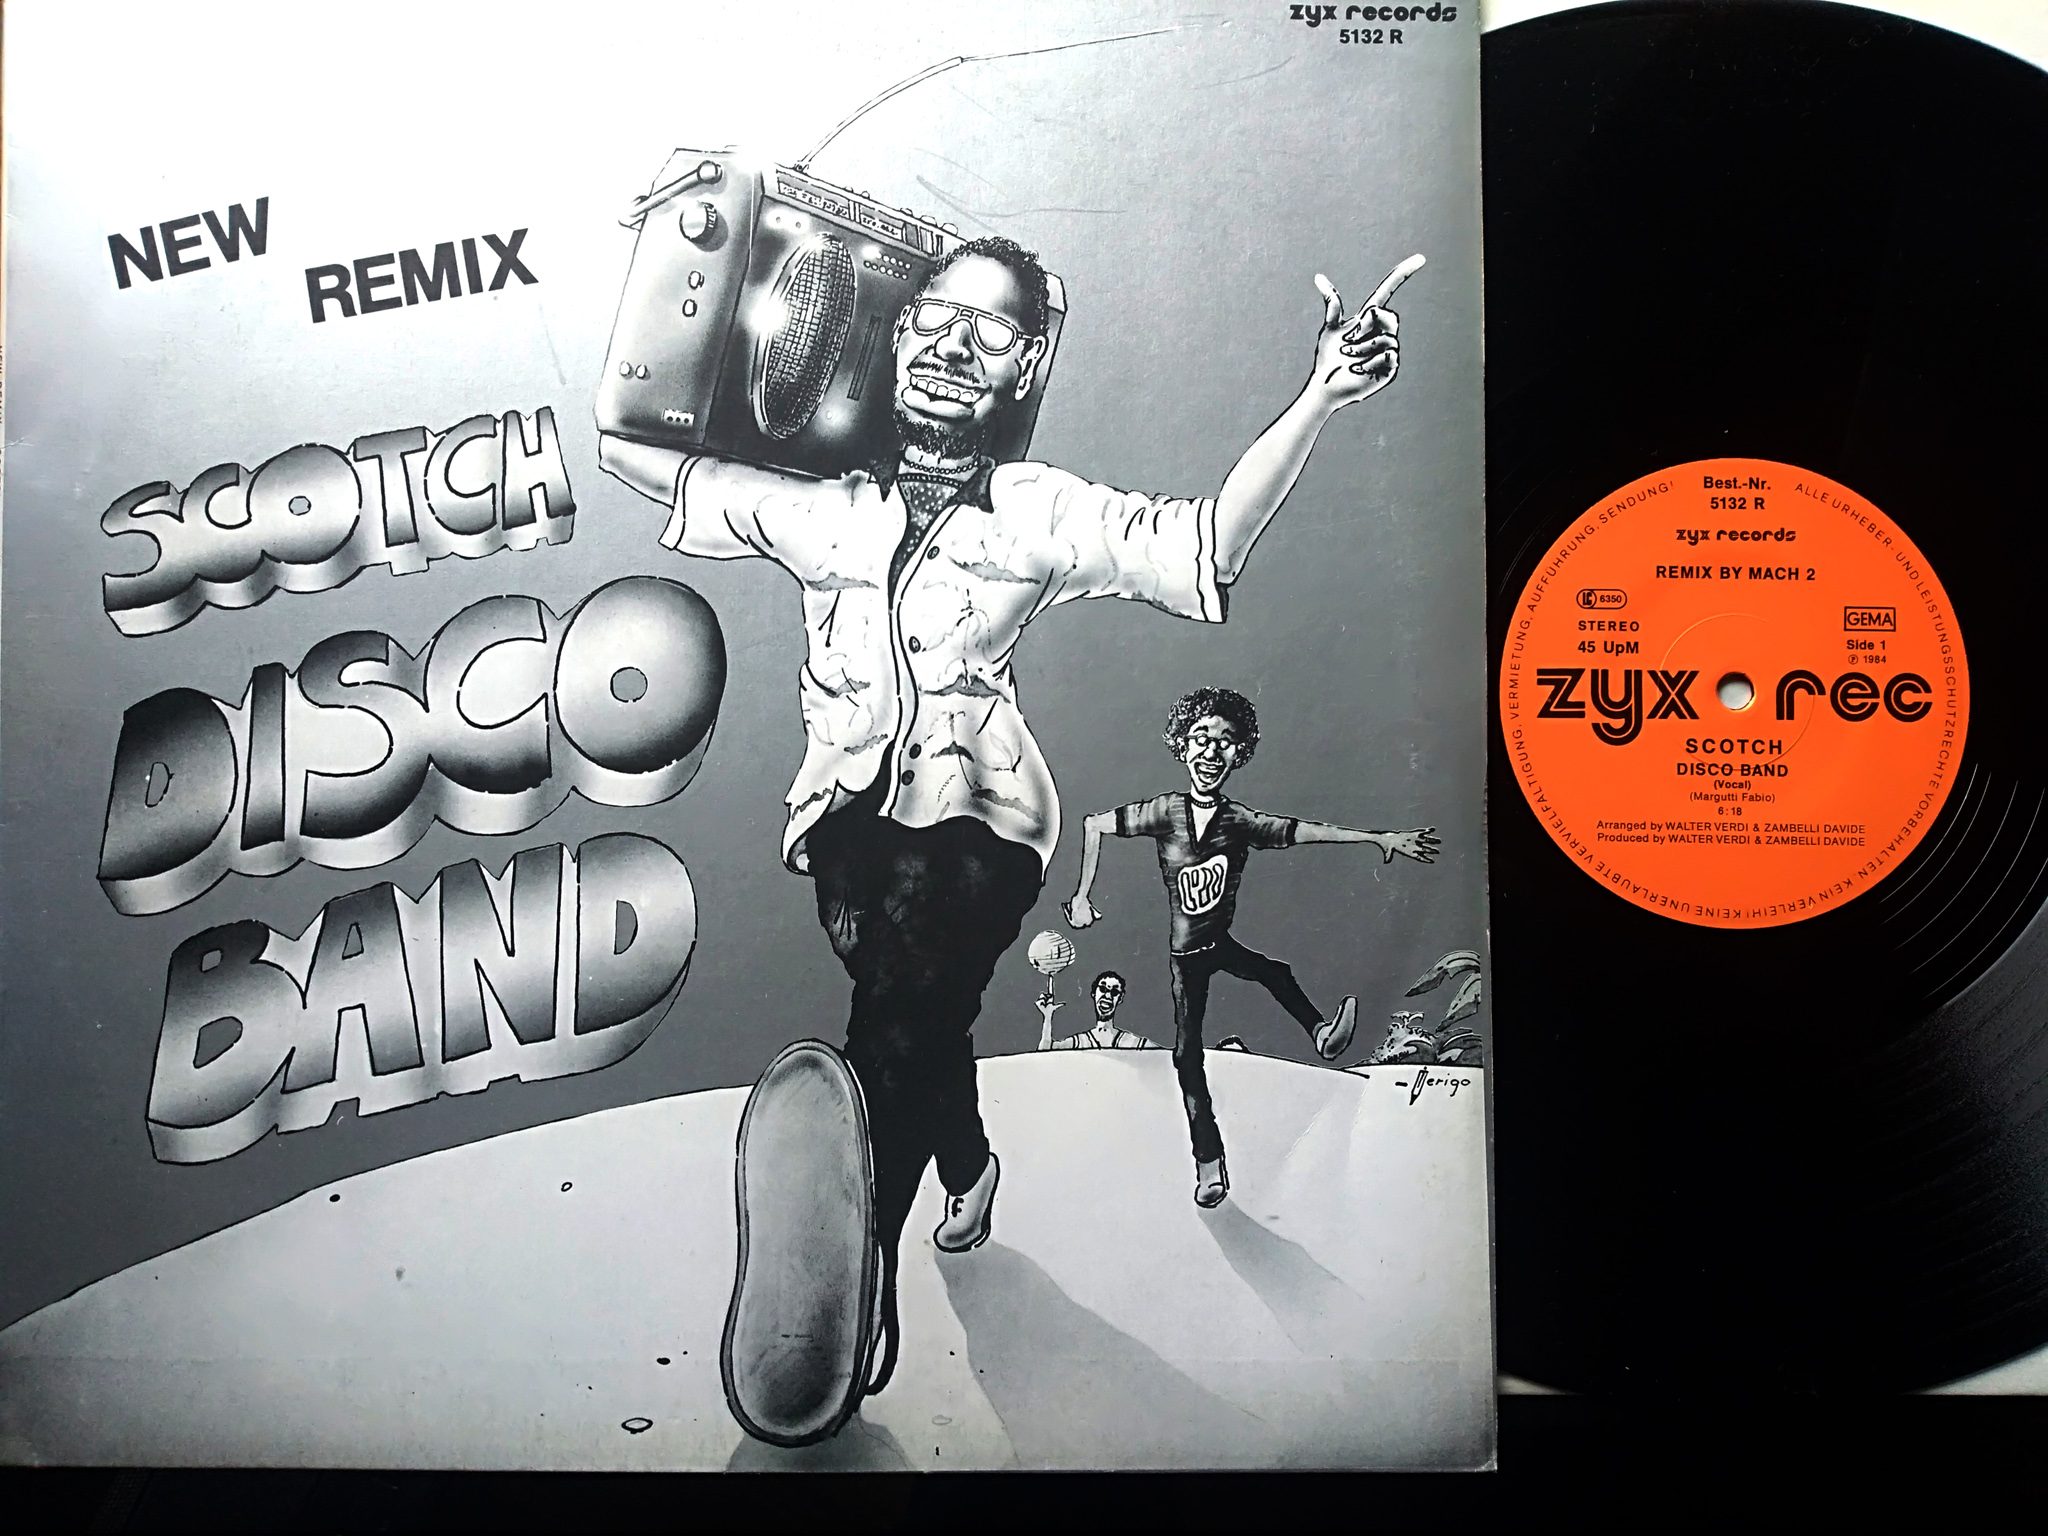 Scotch - Disco Band (Remix)